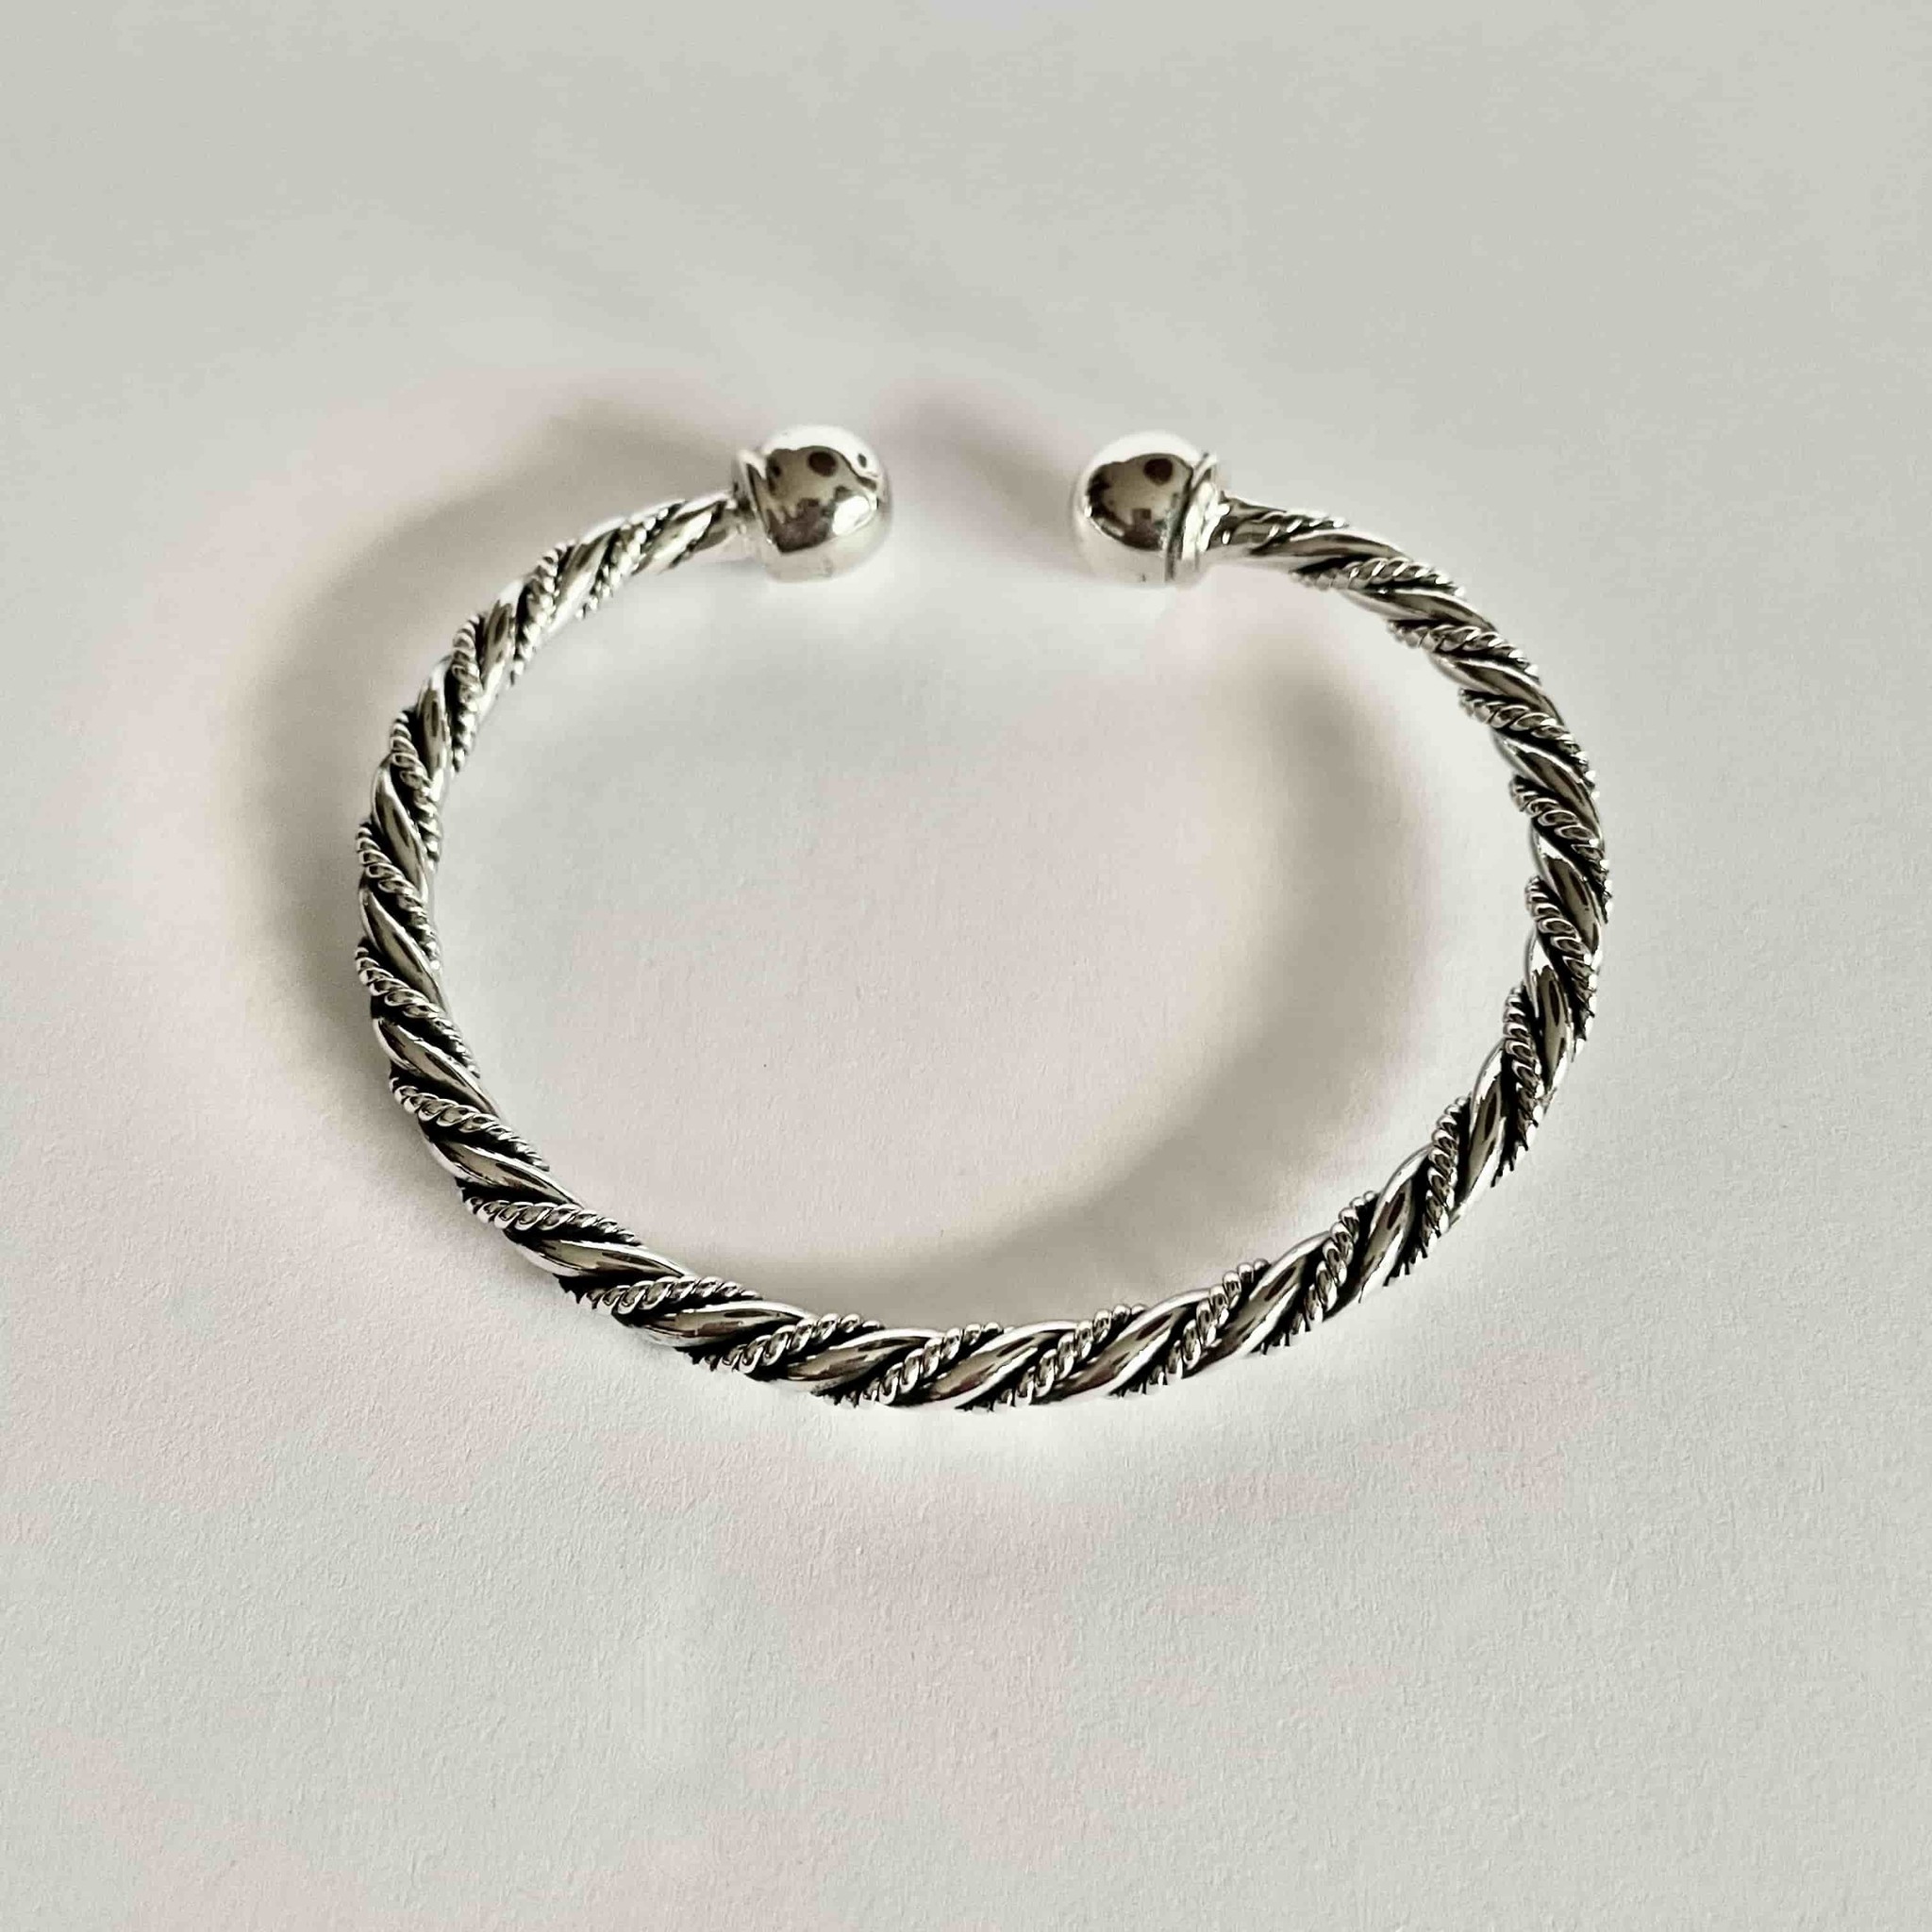 Pat maagd Barry Zilveren twisted bangle armband - Leelavadee Jewelry